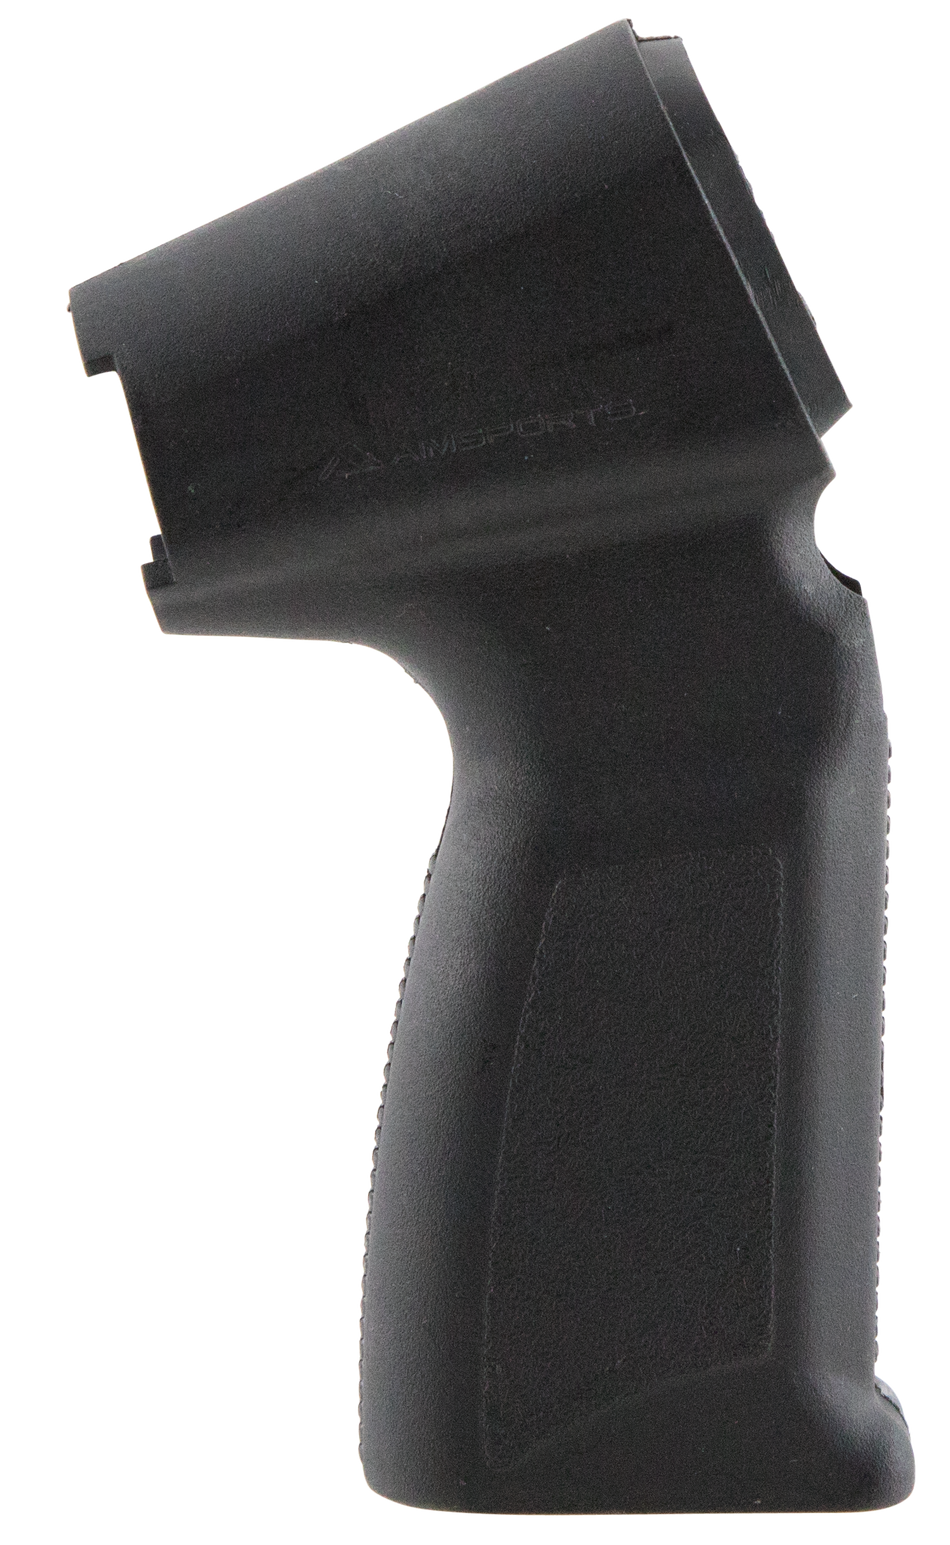 Aim Sports Shotgun, Aimsports Pjspg870  Rem 870 Pistol Grip